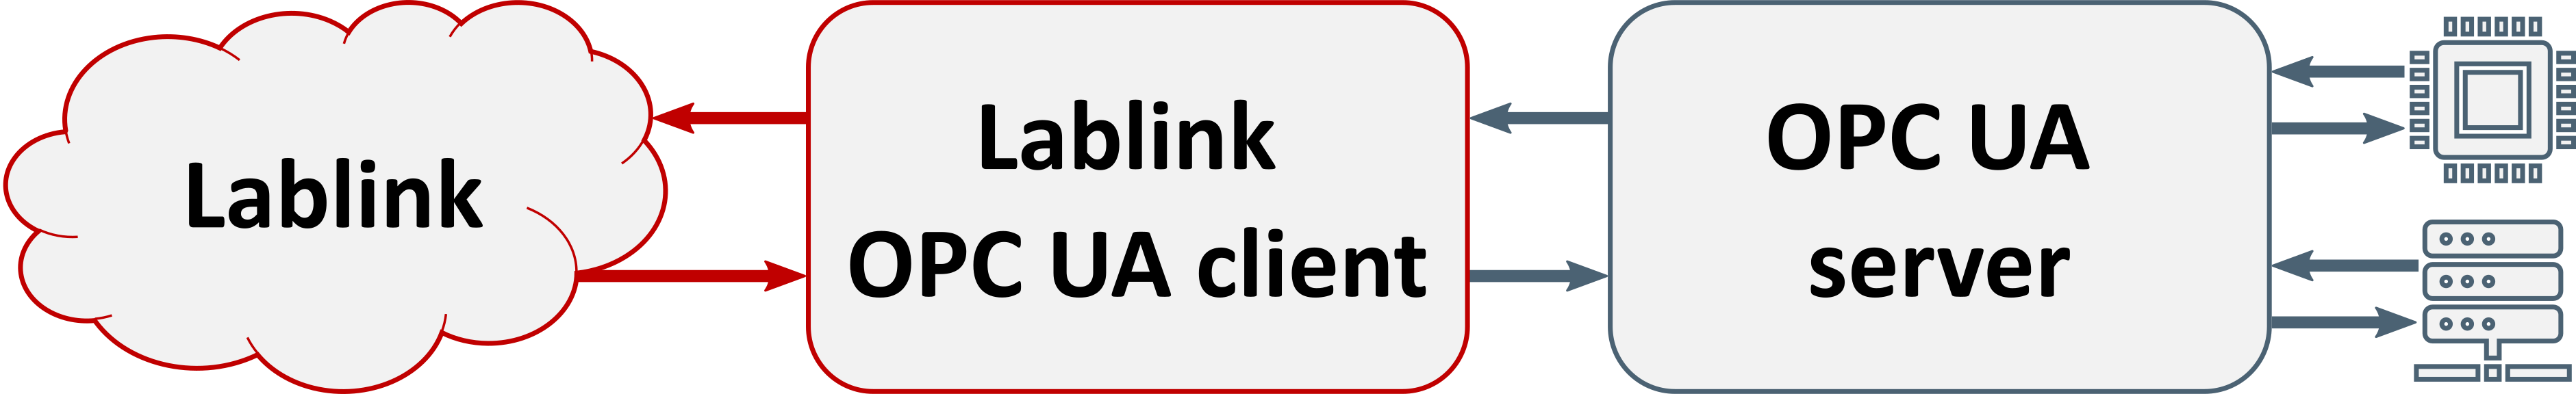 Lablink OPC UA client overview.